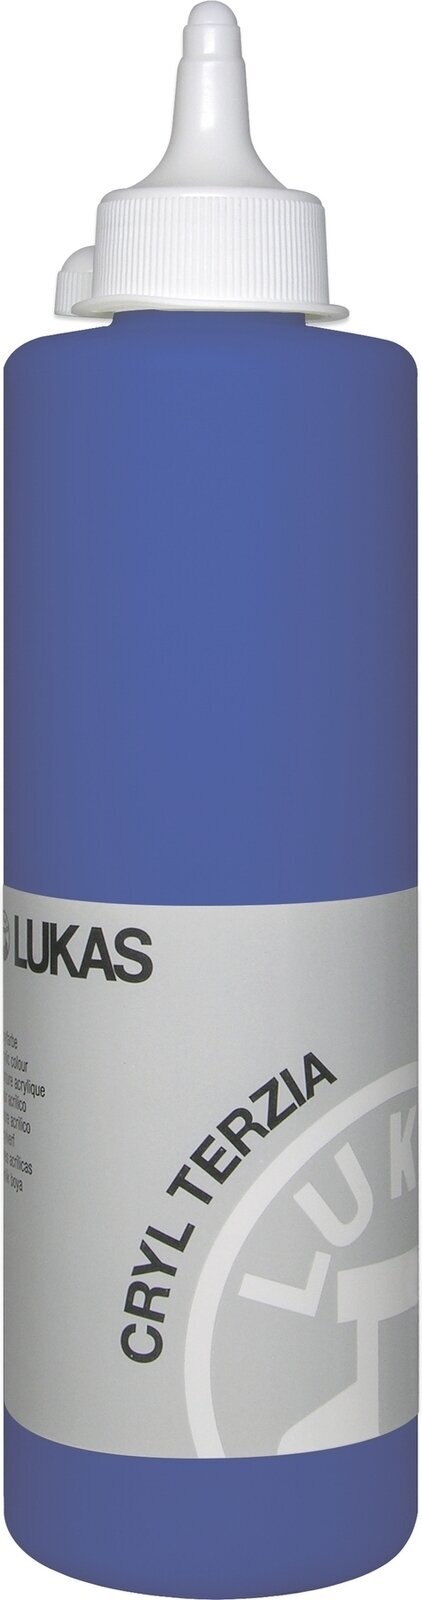 Acrylic Paint Lukas Cryl Terzia Acrylic Paint Plastic Bottle Acrylic Paint Ultramarine 500 ml 1 pc